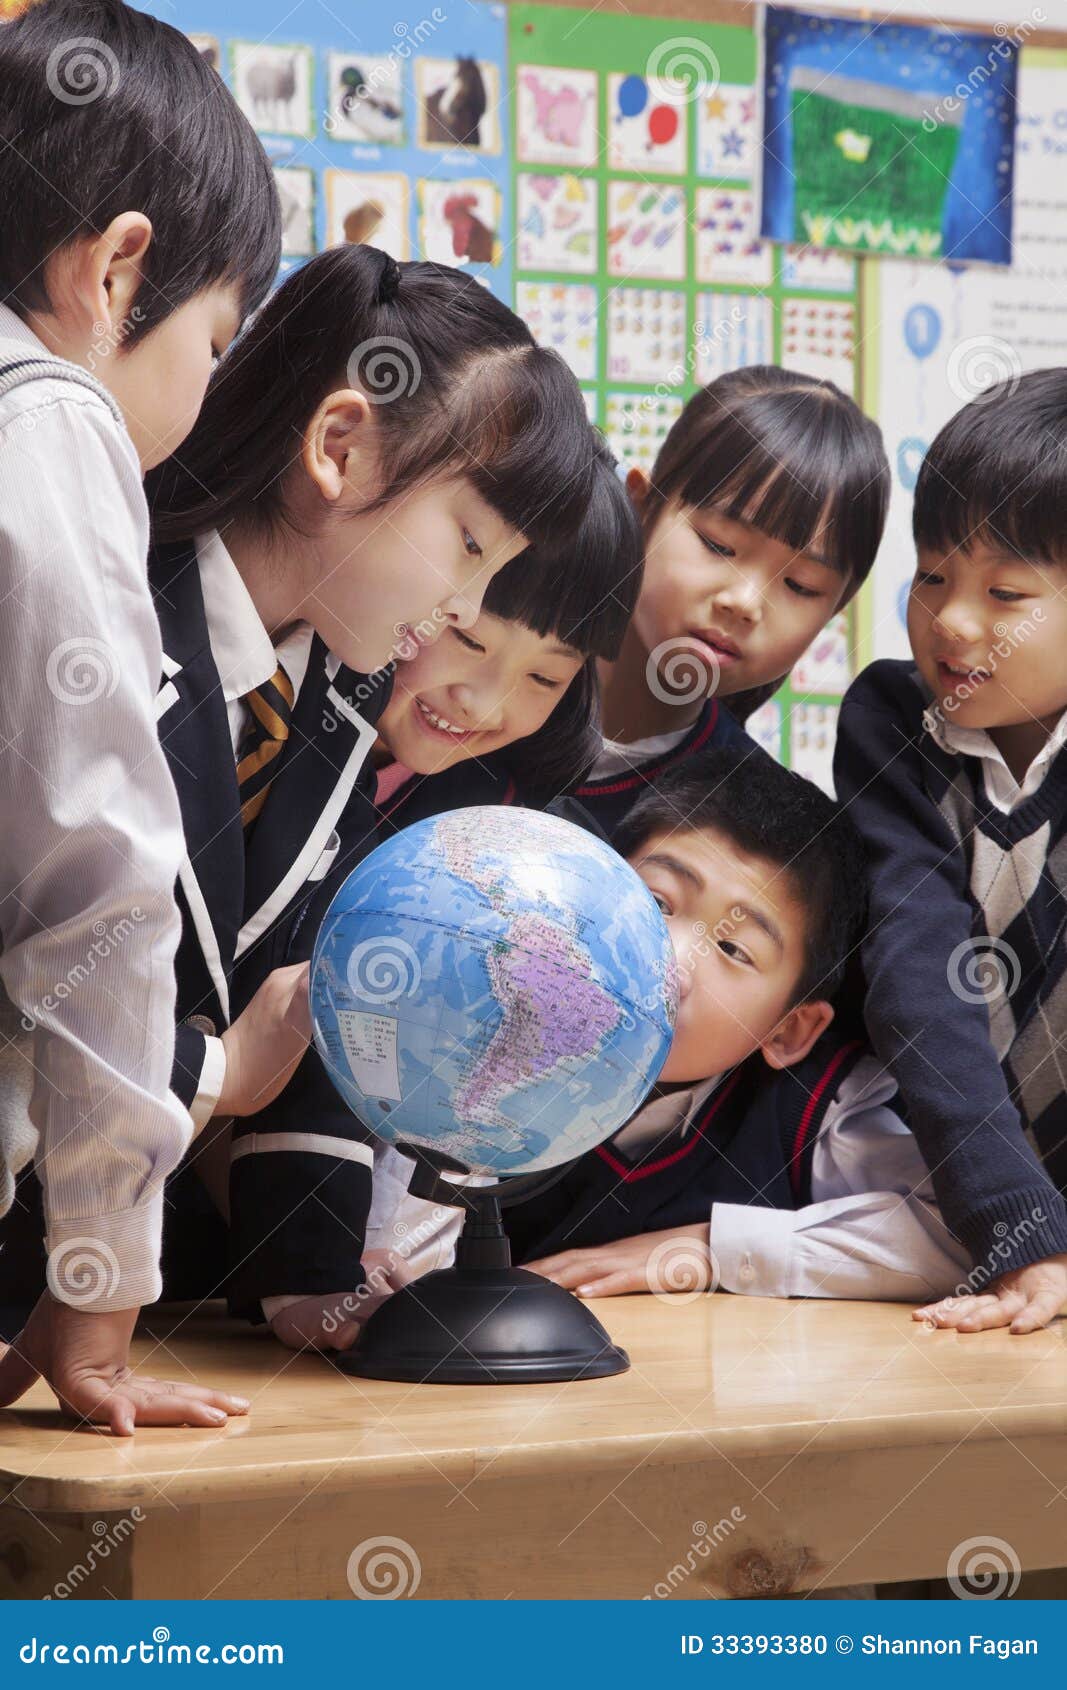 school visit the globe